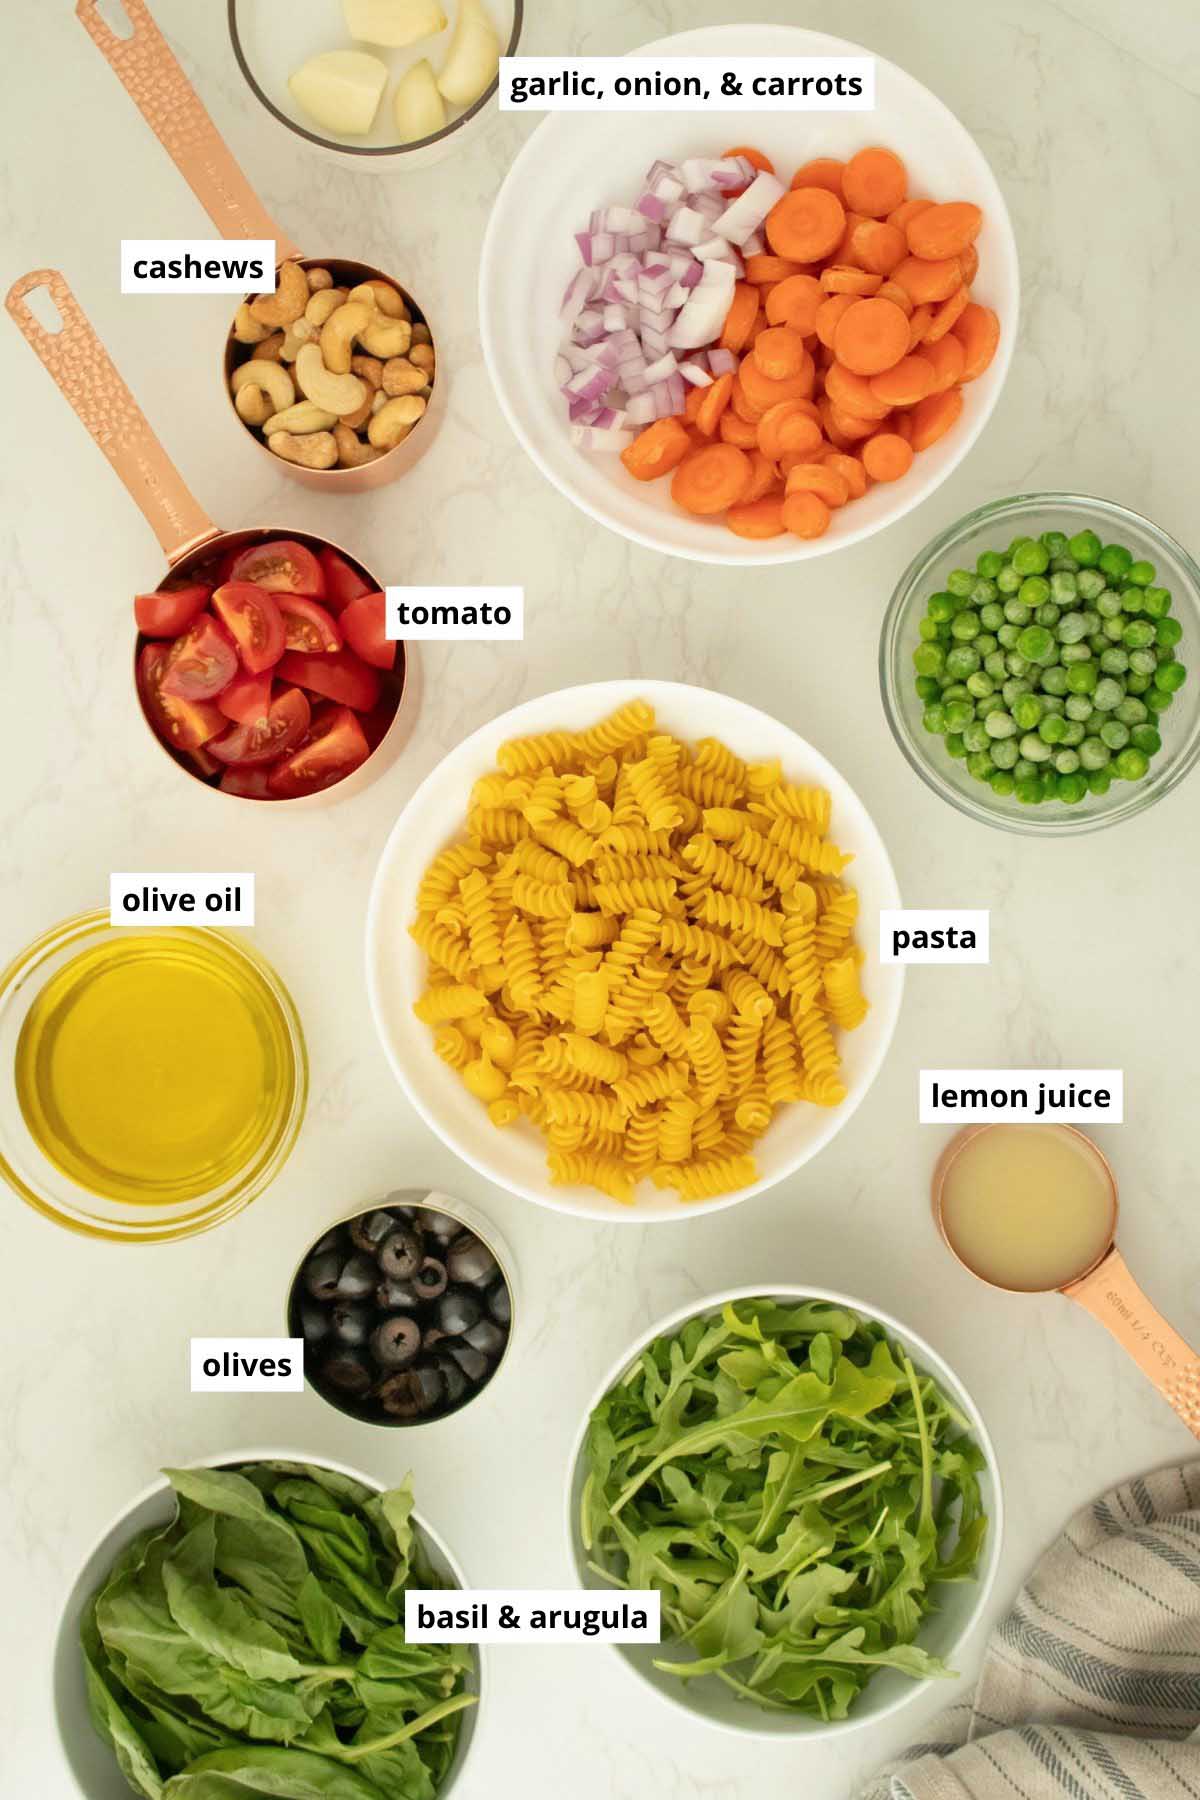 rotini pasta, basil, veggies, oil, lemon juice, and garlic with text labels on each ingredient